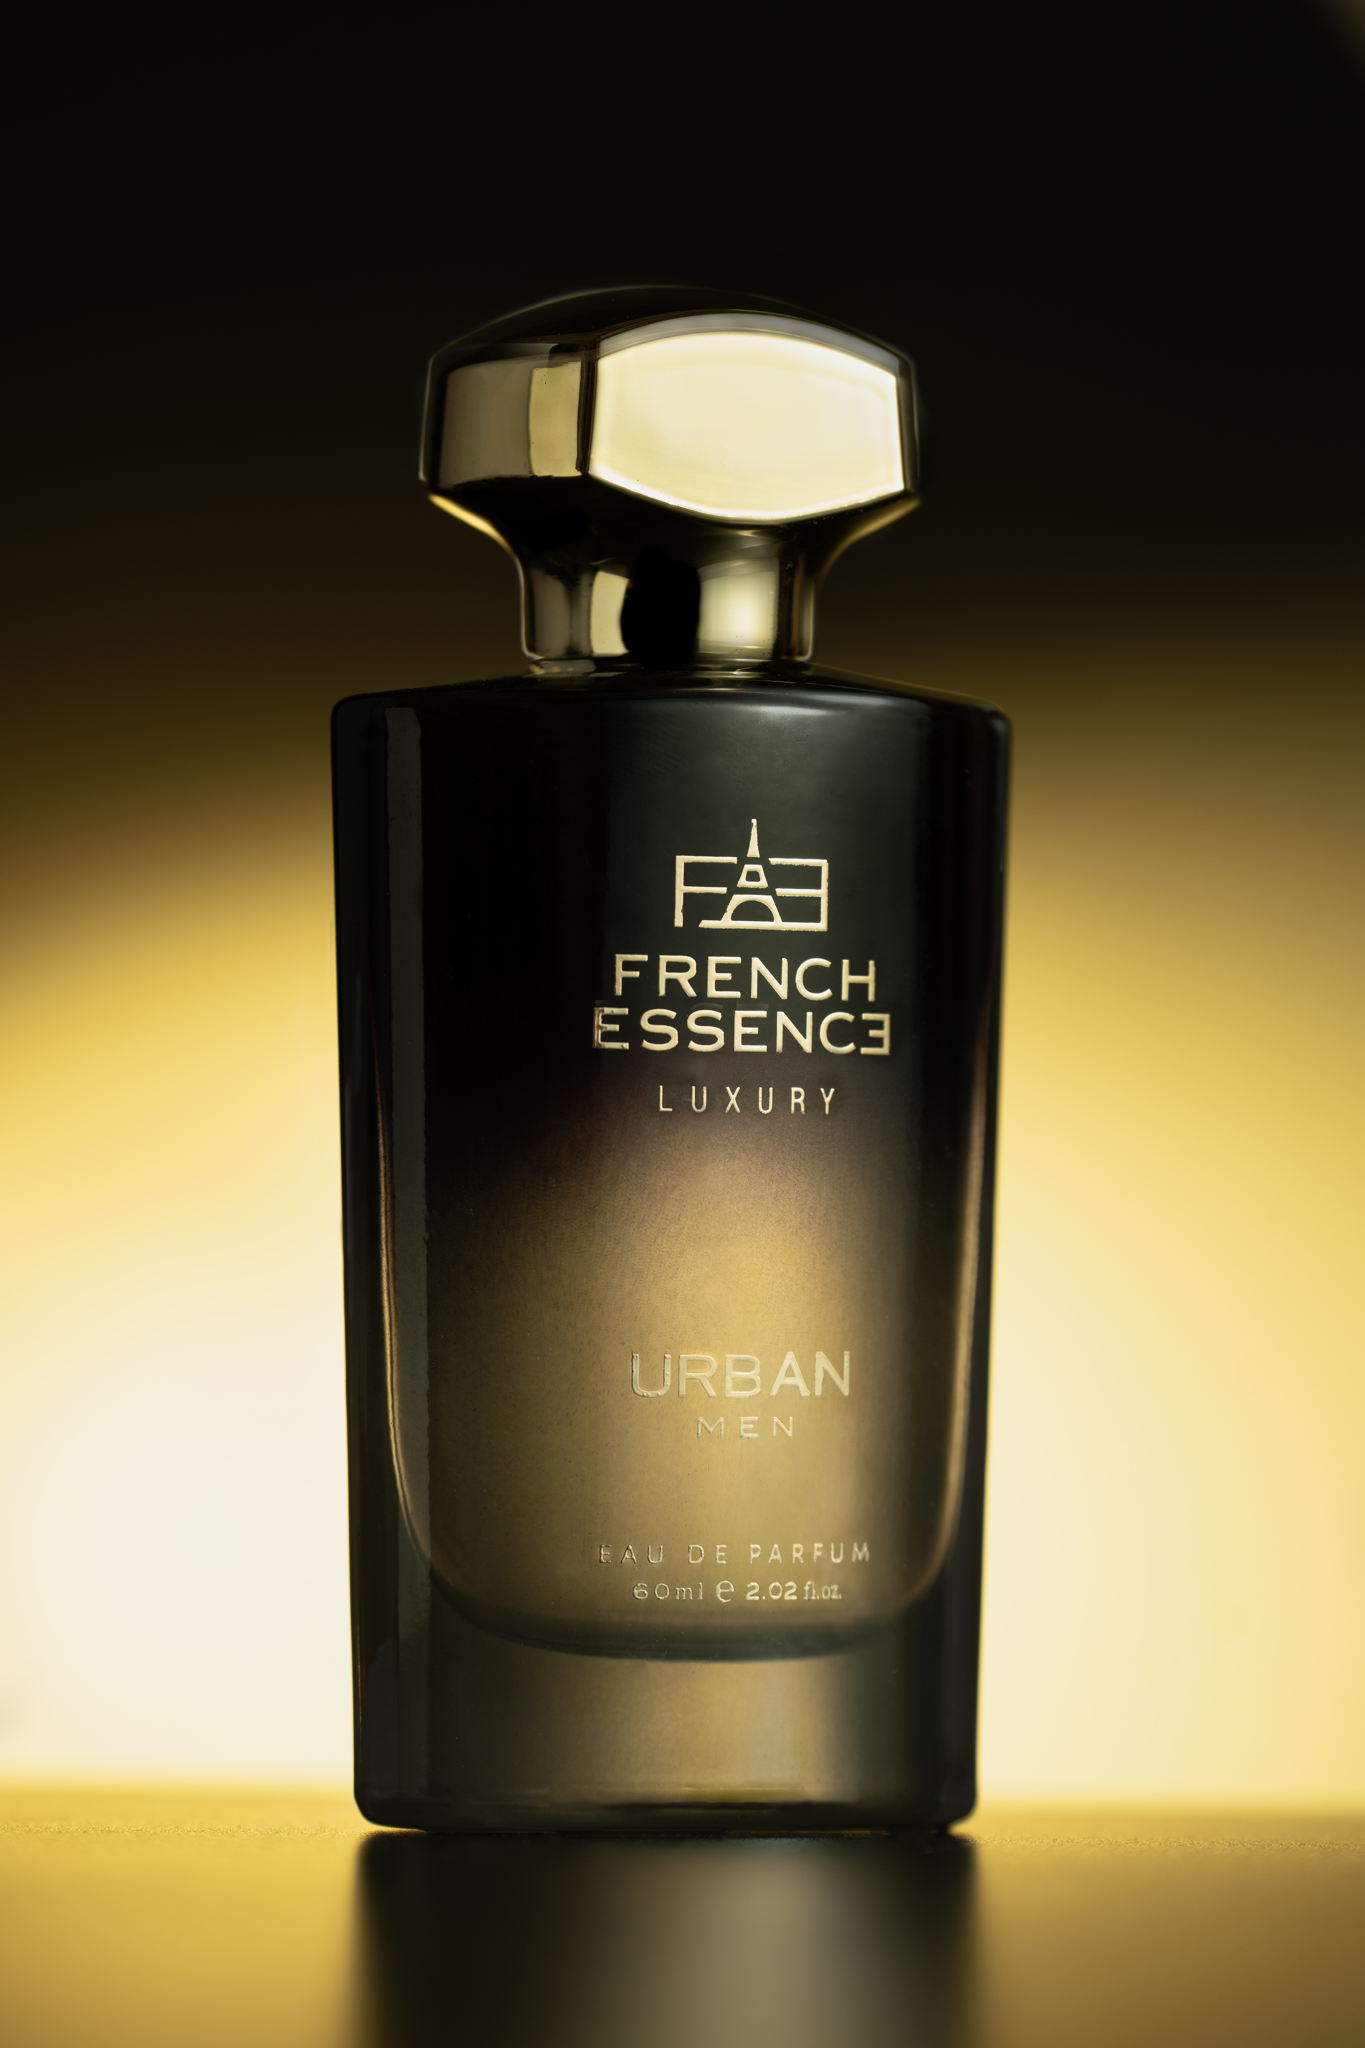 A bottle of French Essence Luxury Urban Eau de Parfum for Men. The bottle is a sleek black glass with a silver cap